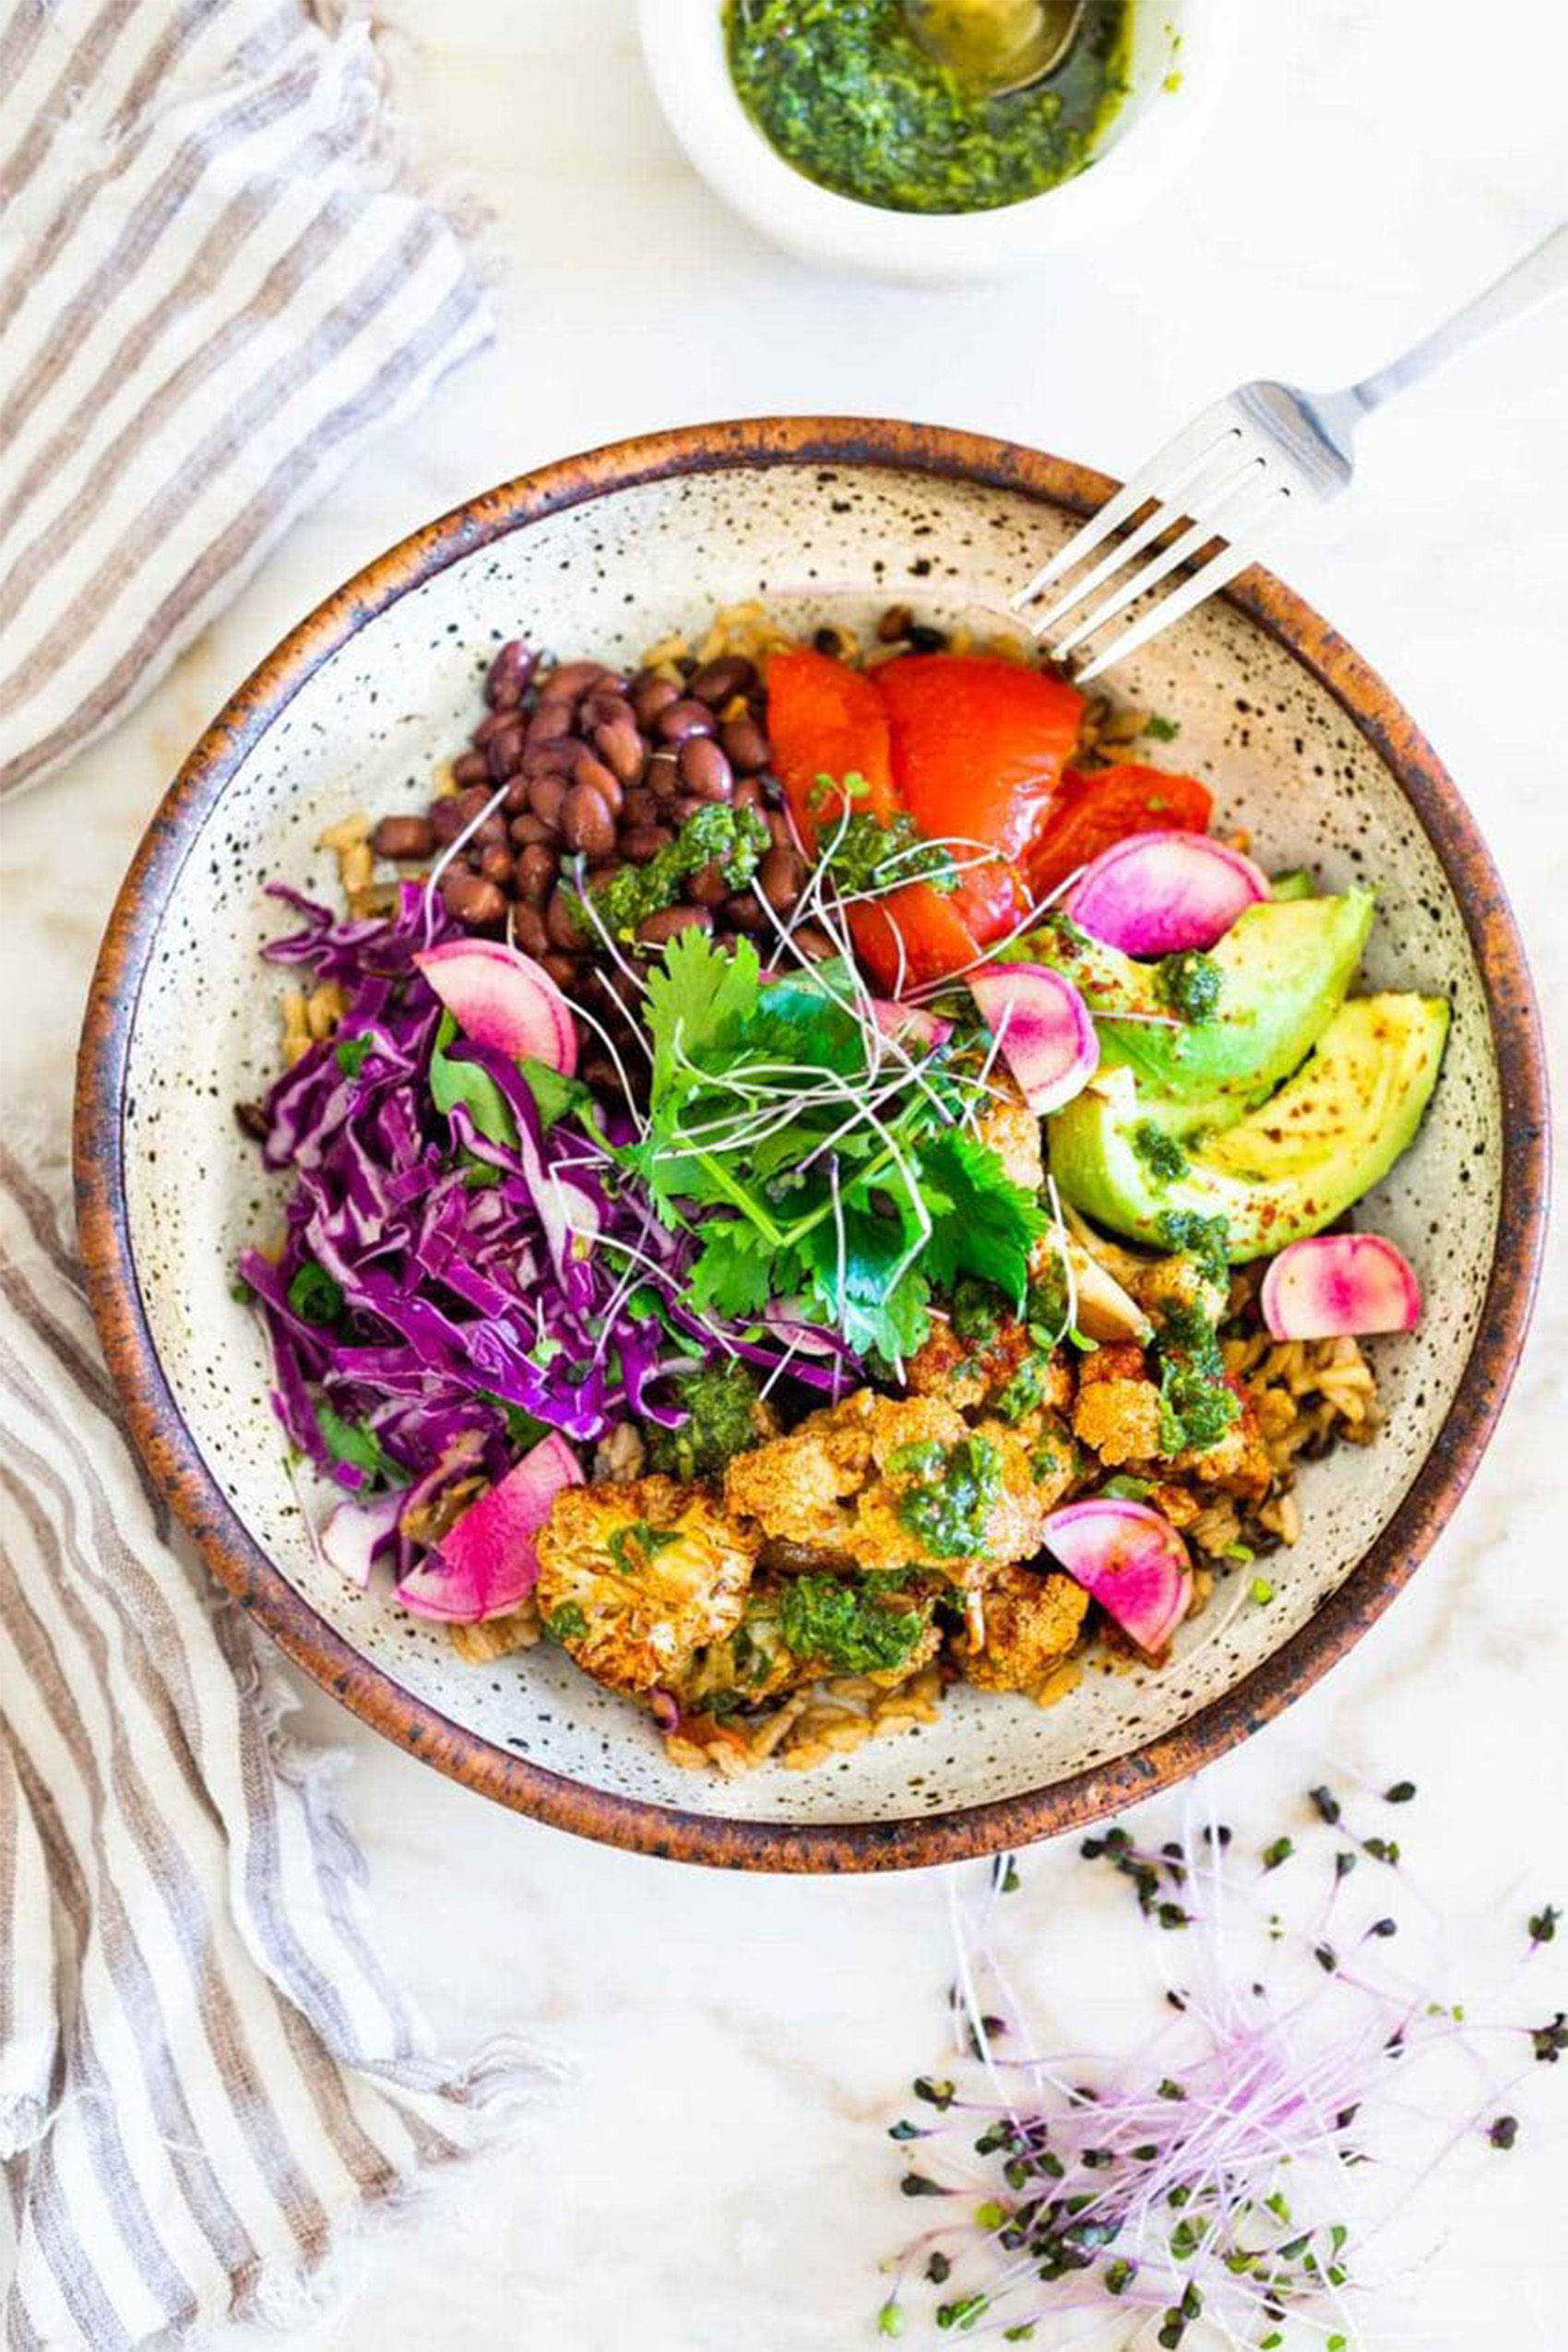 https://www.emilieeats.com/wp-content/uploads/2016/10/25-vegan-power-bowls-packable-lunch-recipes-19.jpg